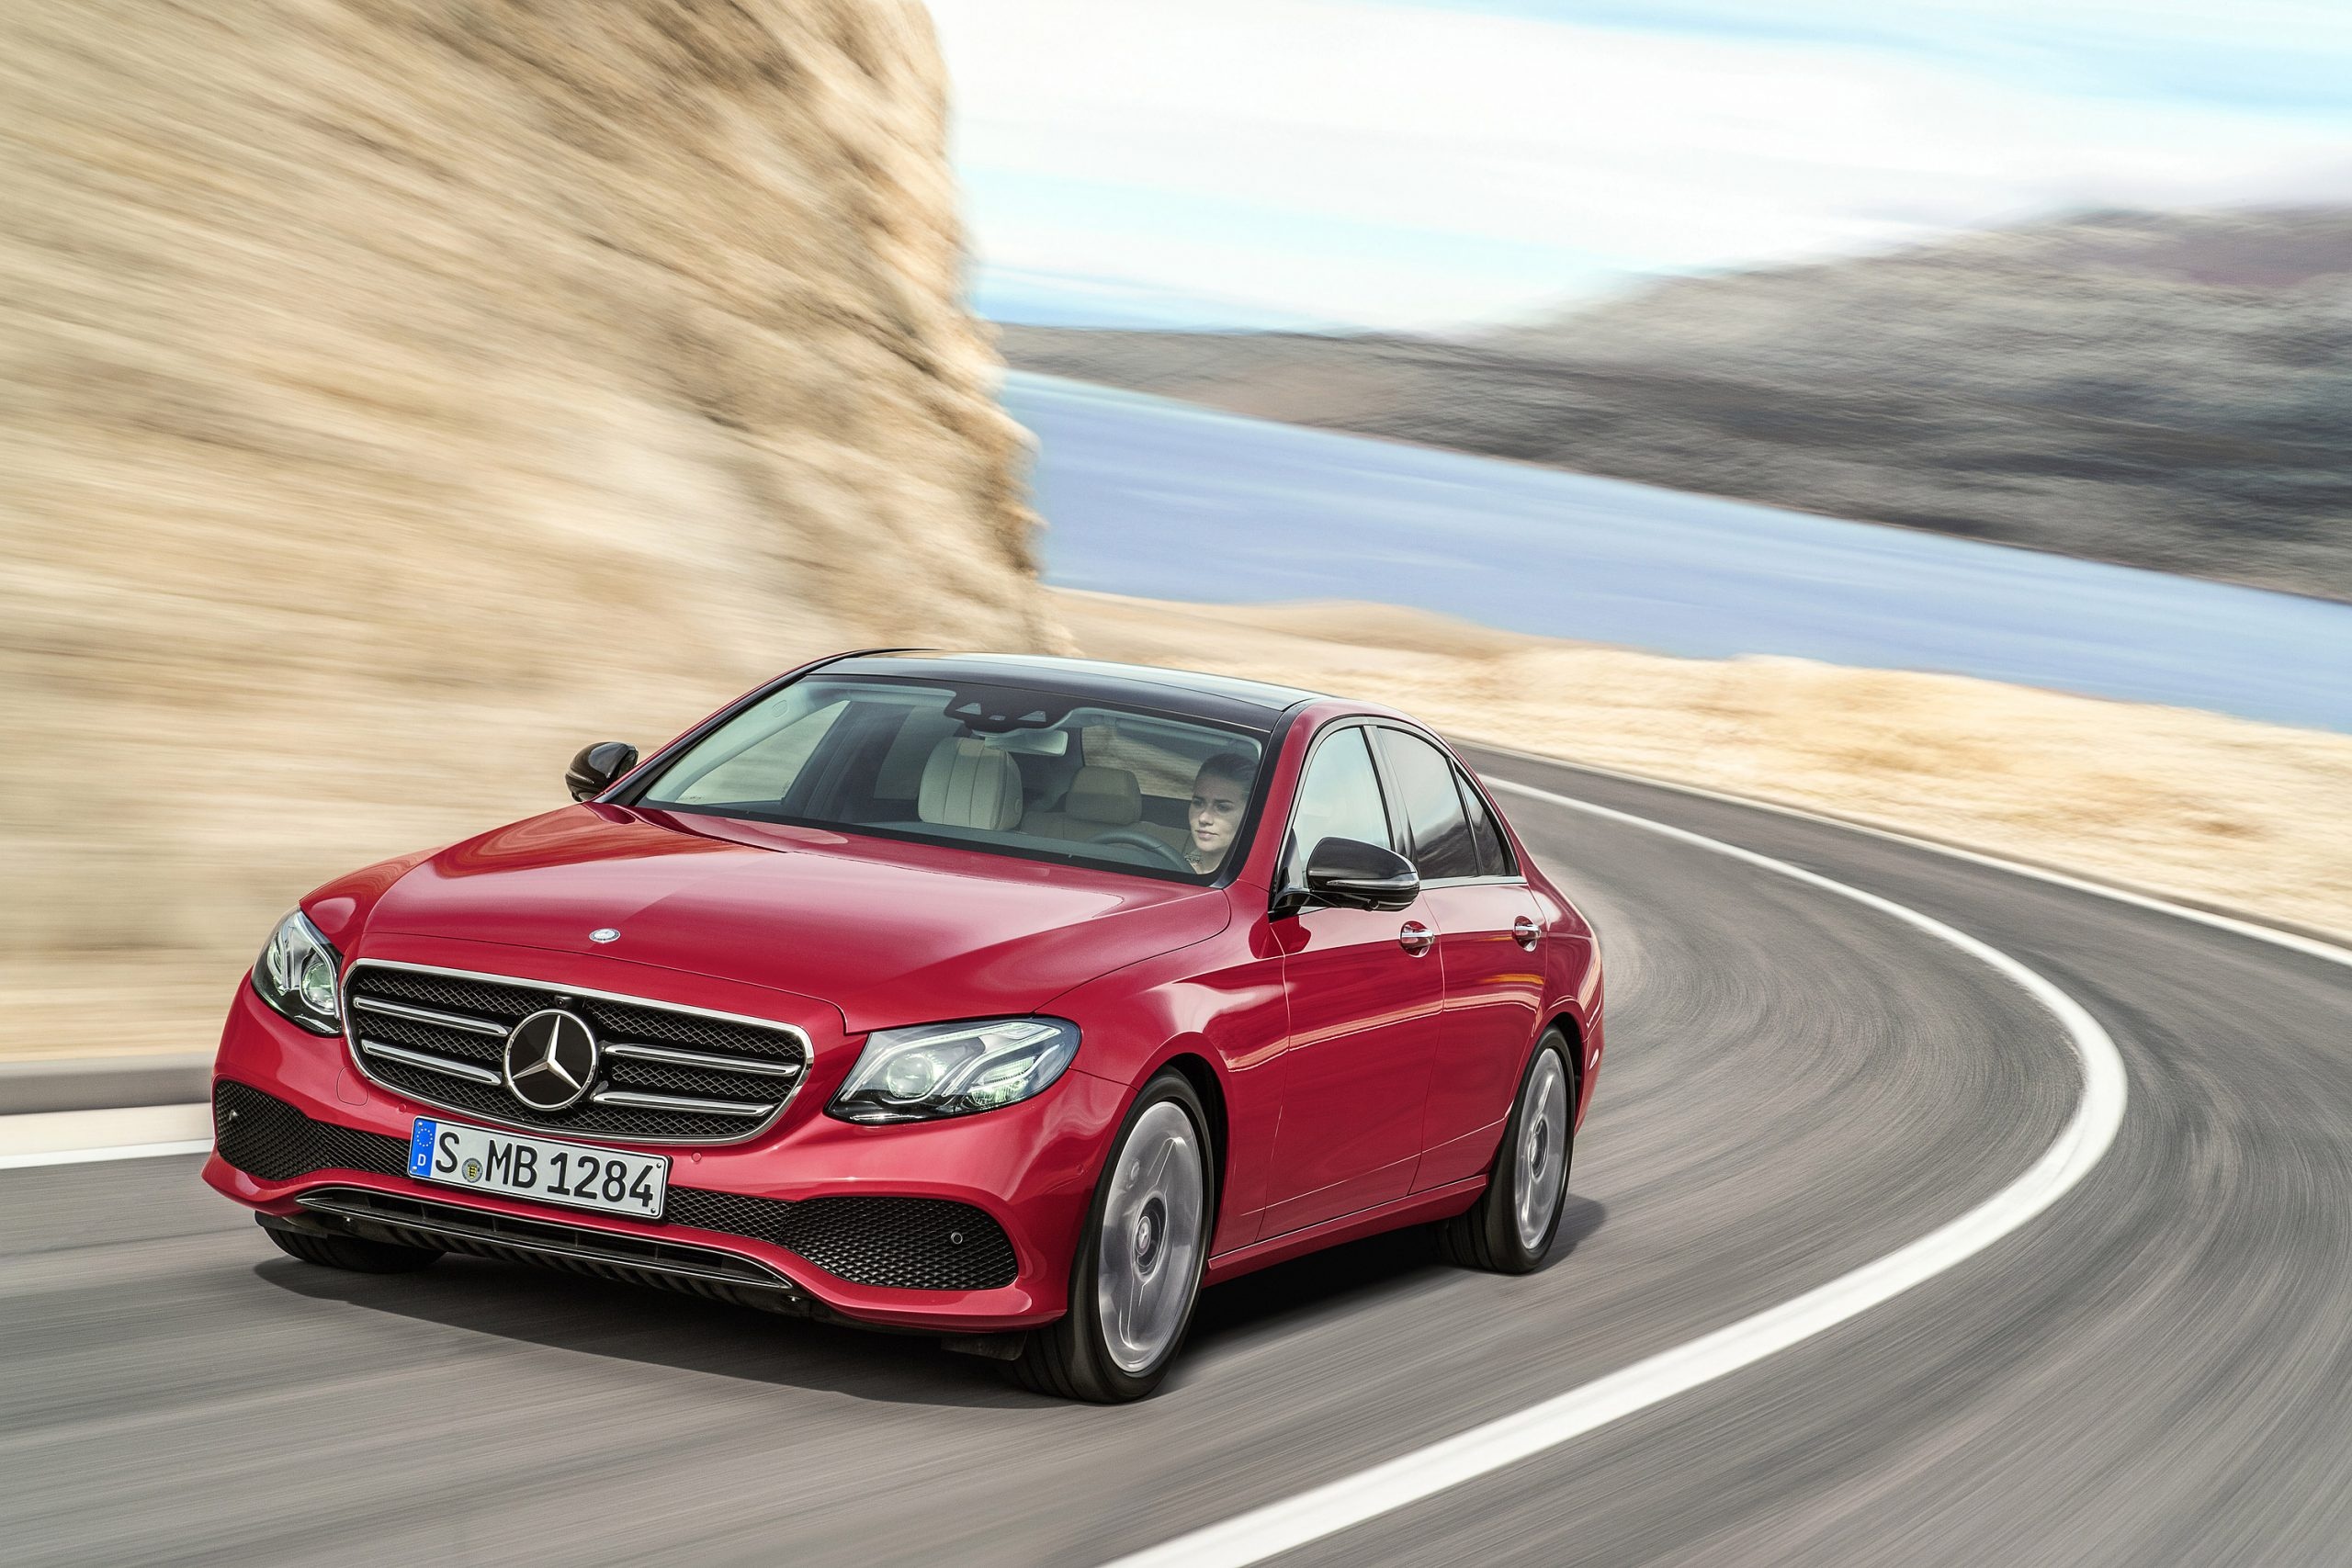 Mercedes-Benz E-Class, Luxury car, Elegance and class, German engineering, 2560x1710 HD Desktop